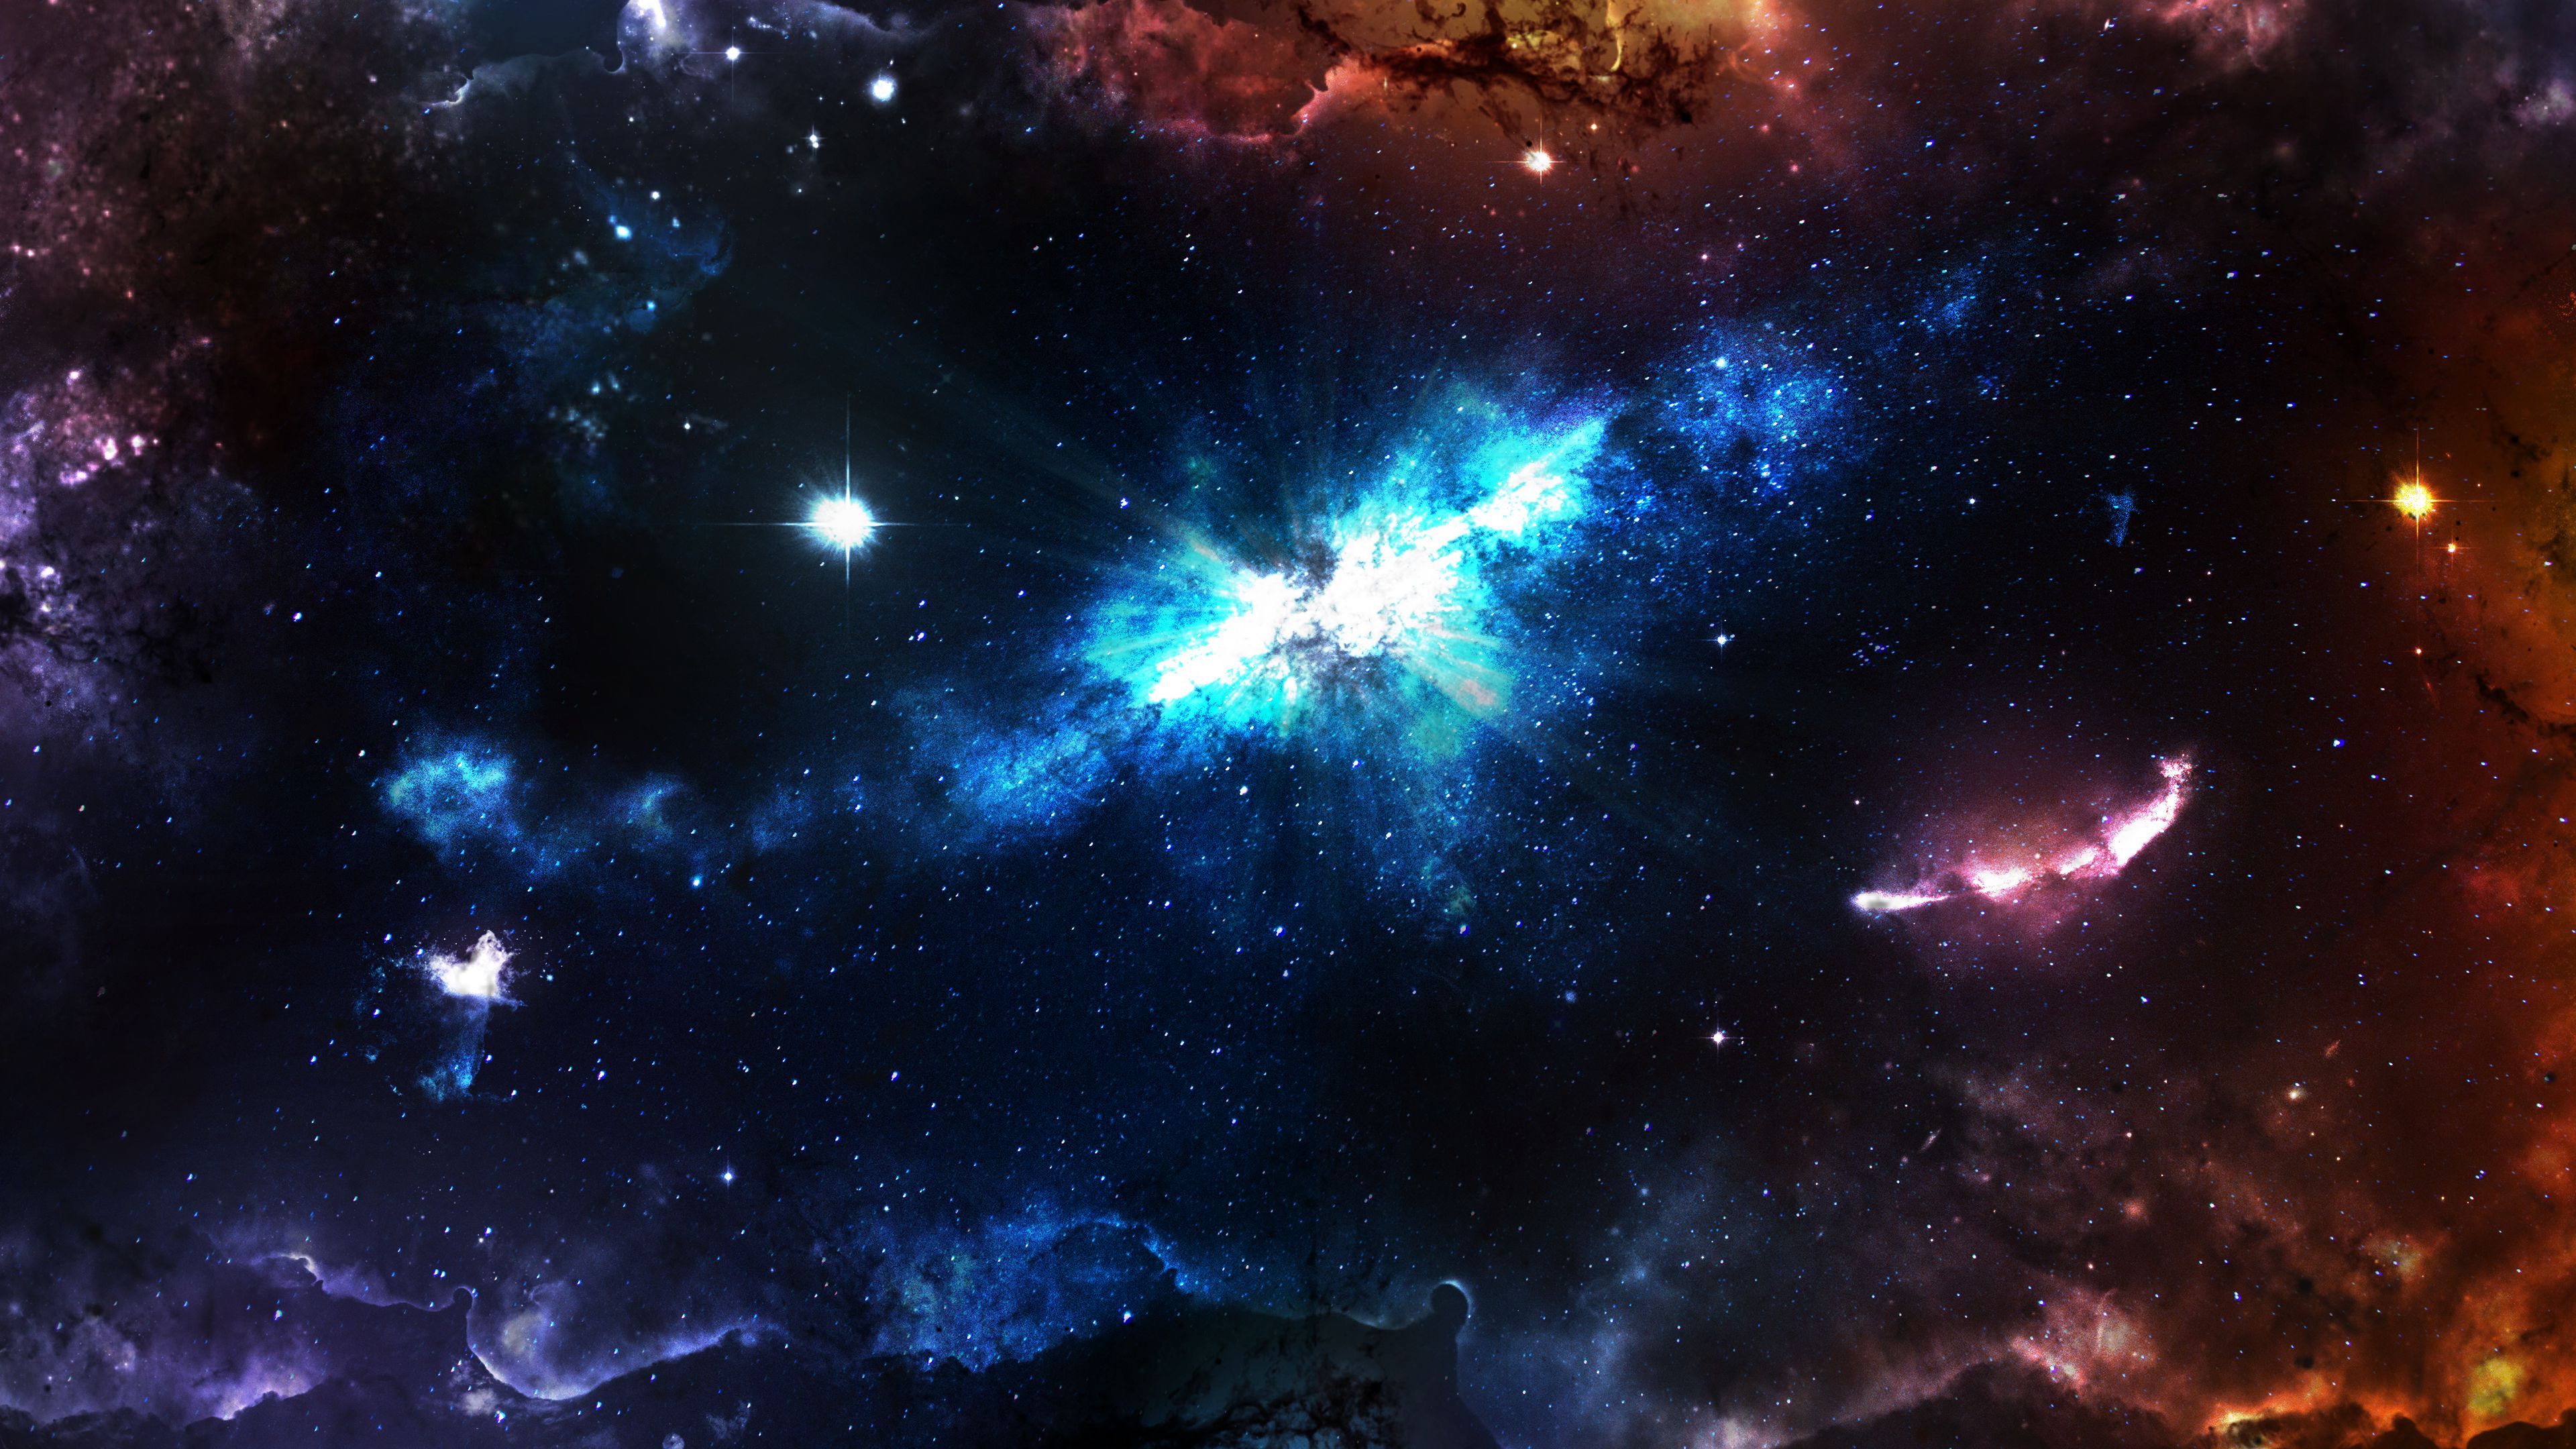 New Lock Screen Wallpapers stars, galaxy, universe, multicolored, motley, nebula